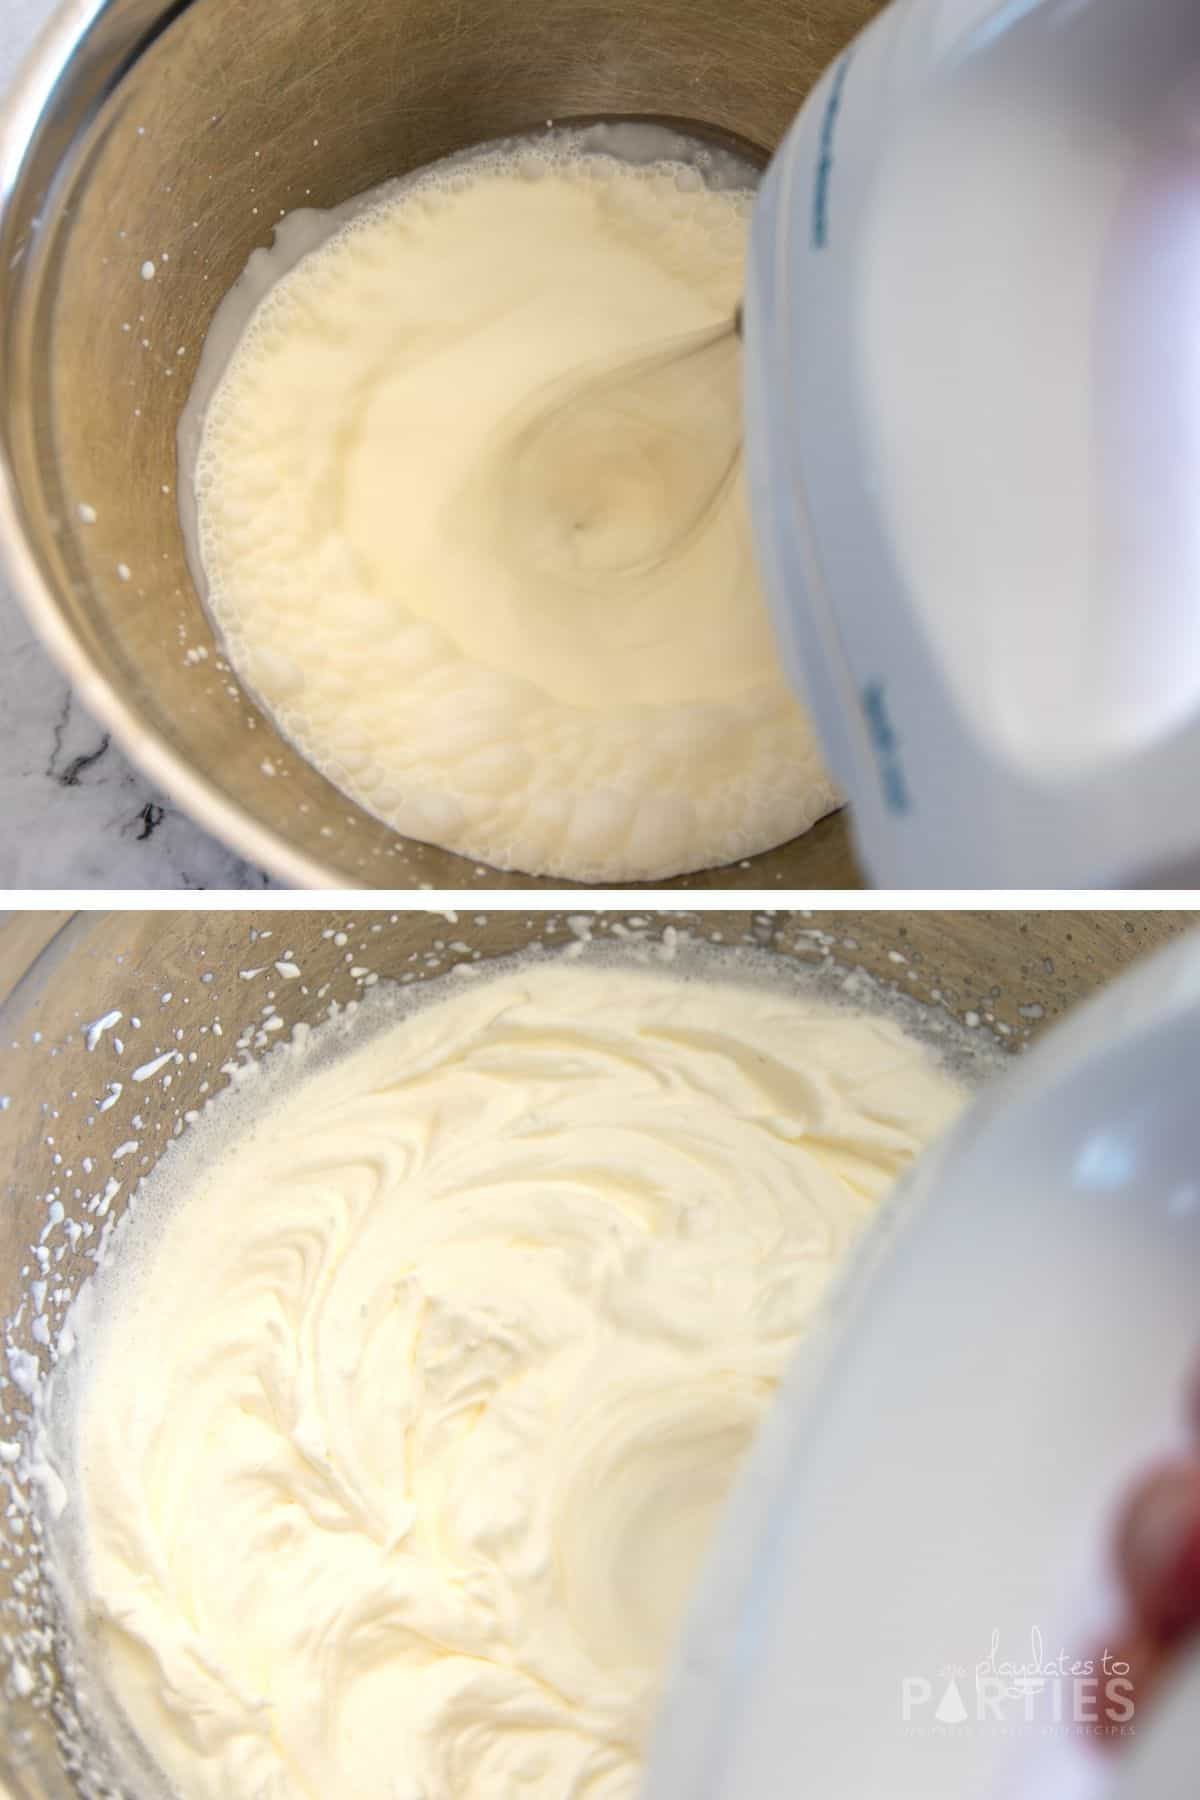 Making homemade whipped cream.